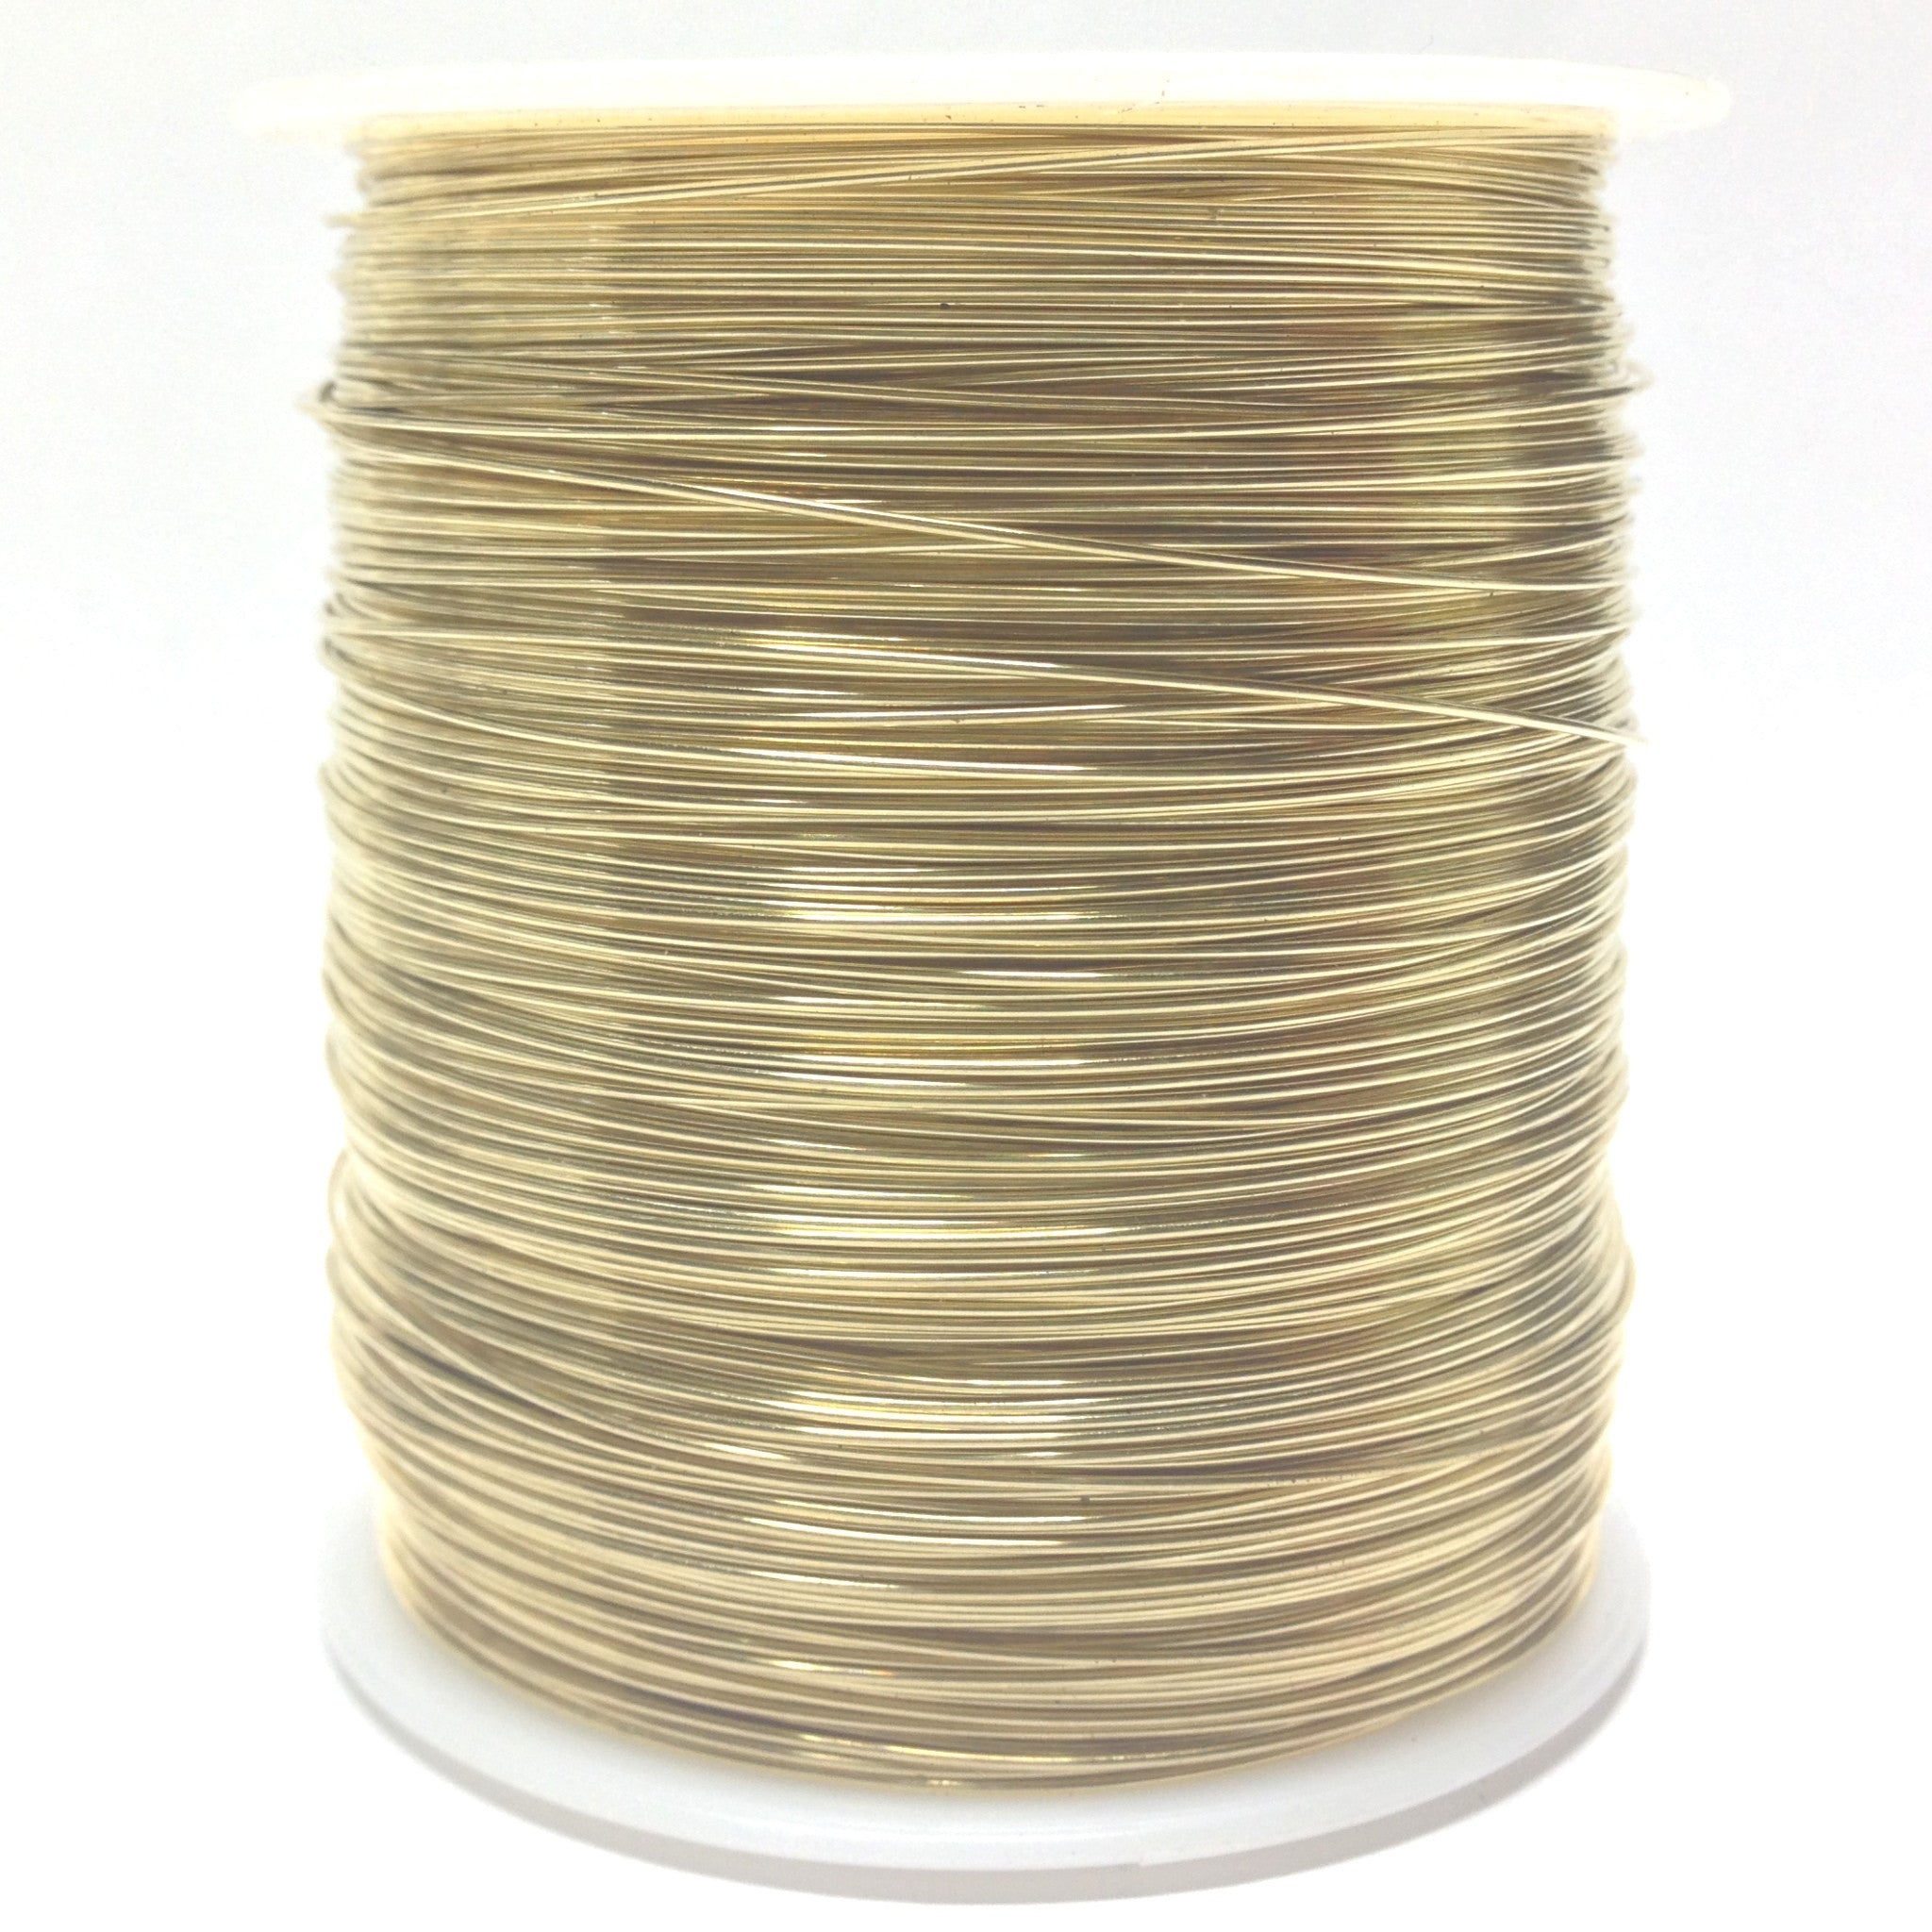 #30 Brass Copper (G) Wire 1 Lb Spool (1 piece)